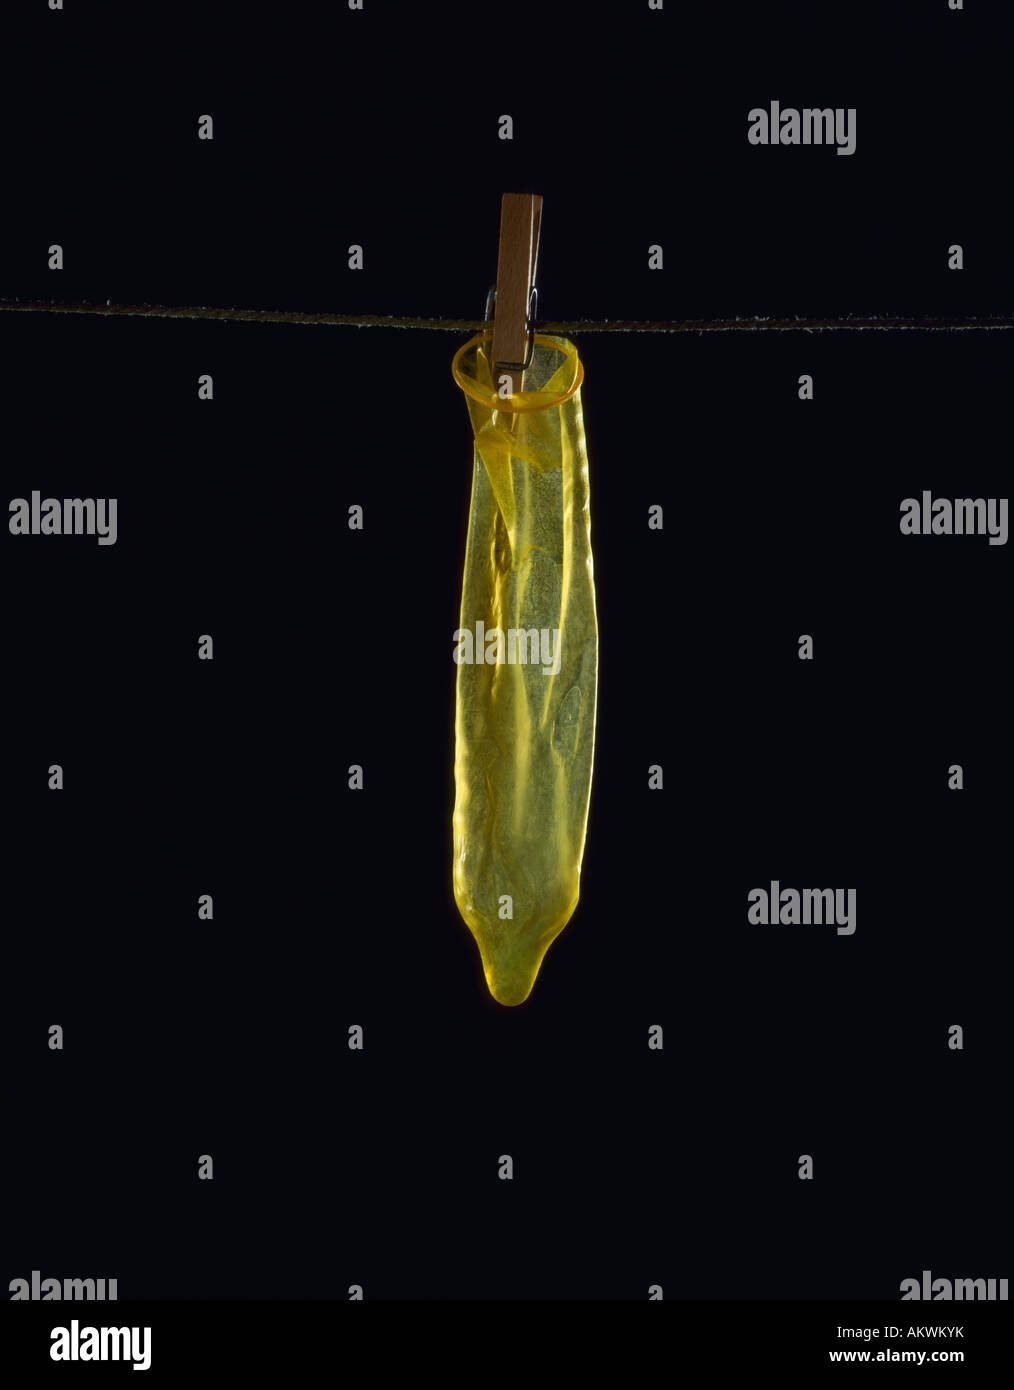 Preservativo usato su stendibiancheria, close-up Foto stock - Alamy